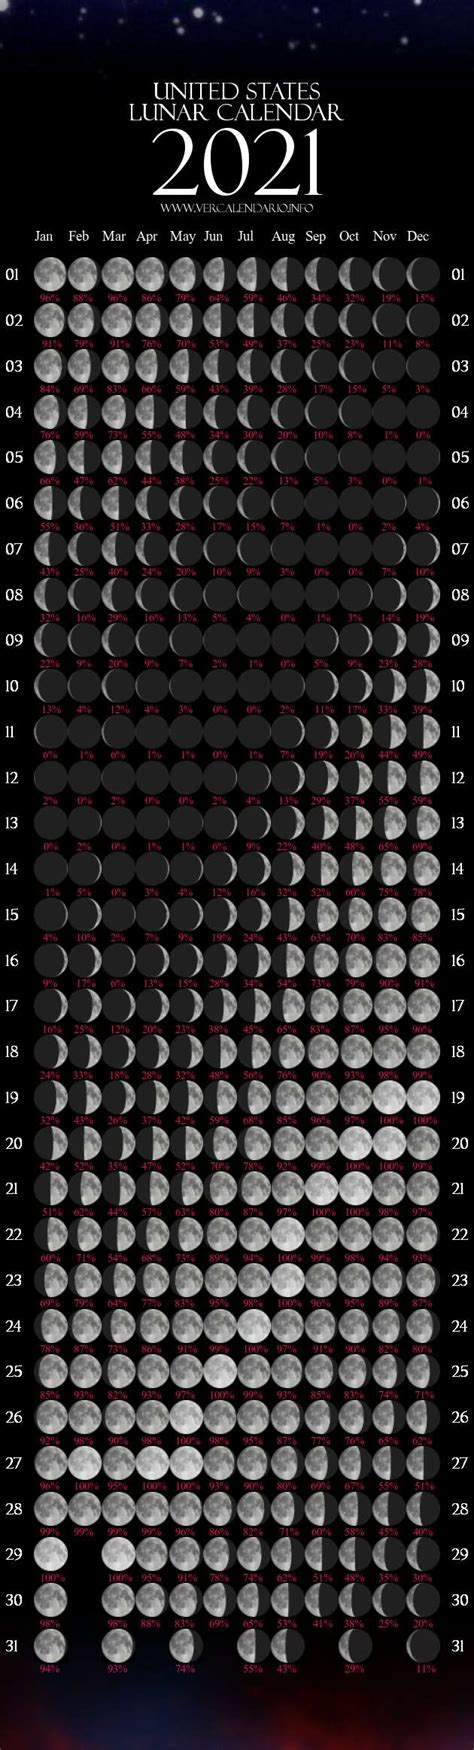 Free online lunar conception calculator allows you to try the lunar conception method. 2021 Lunar Calendar Printable Pdf | 2021 Printable Calendars